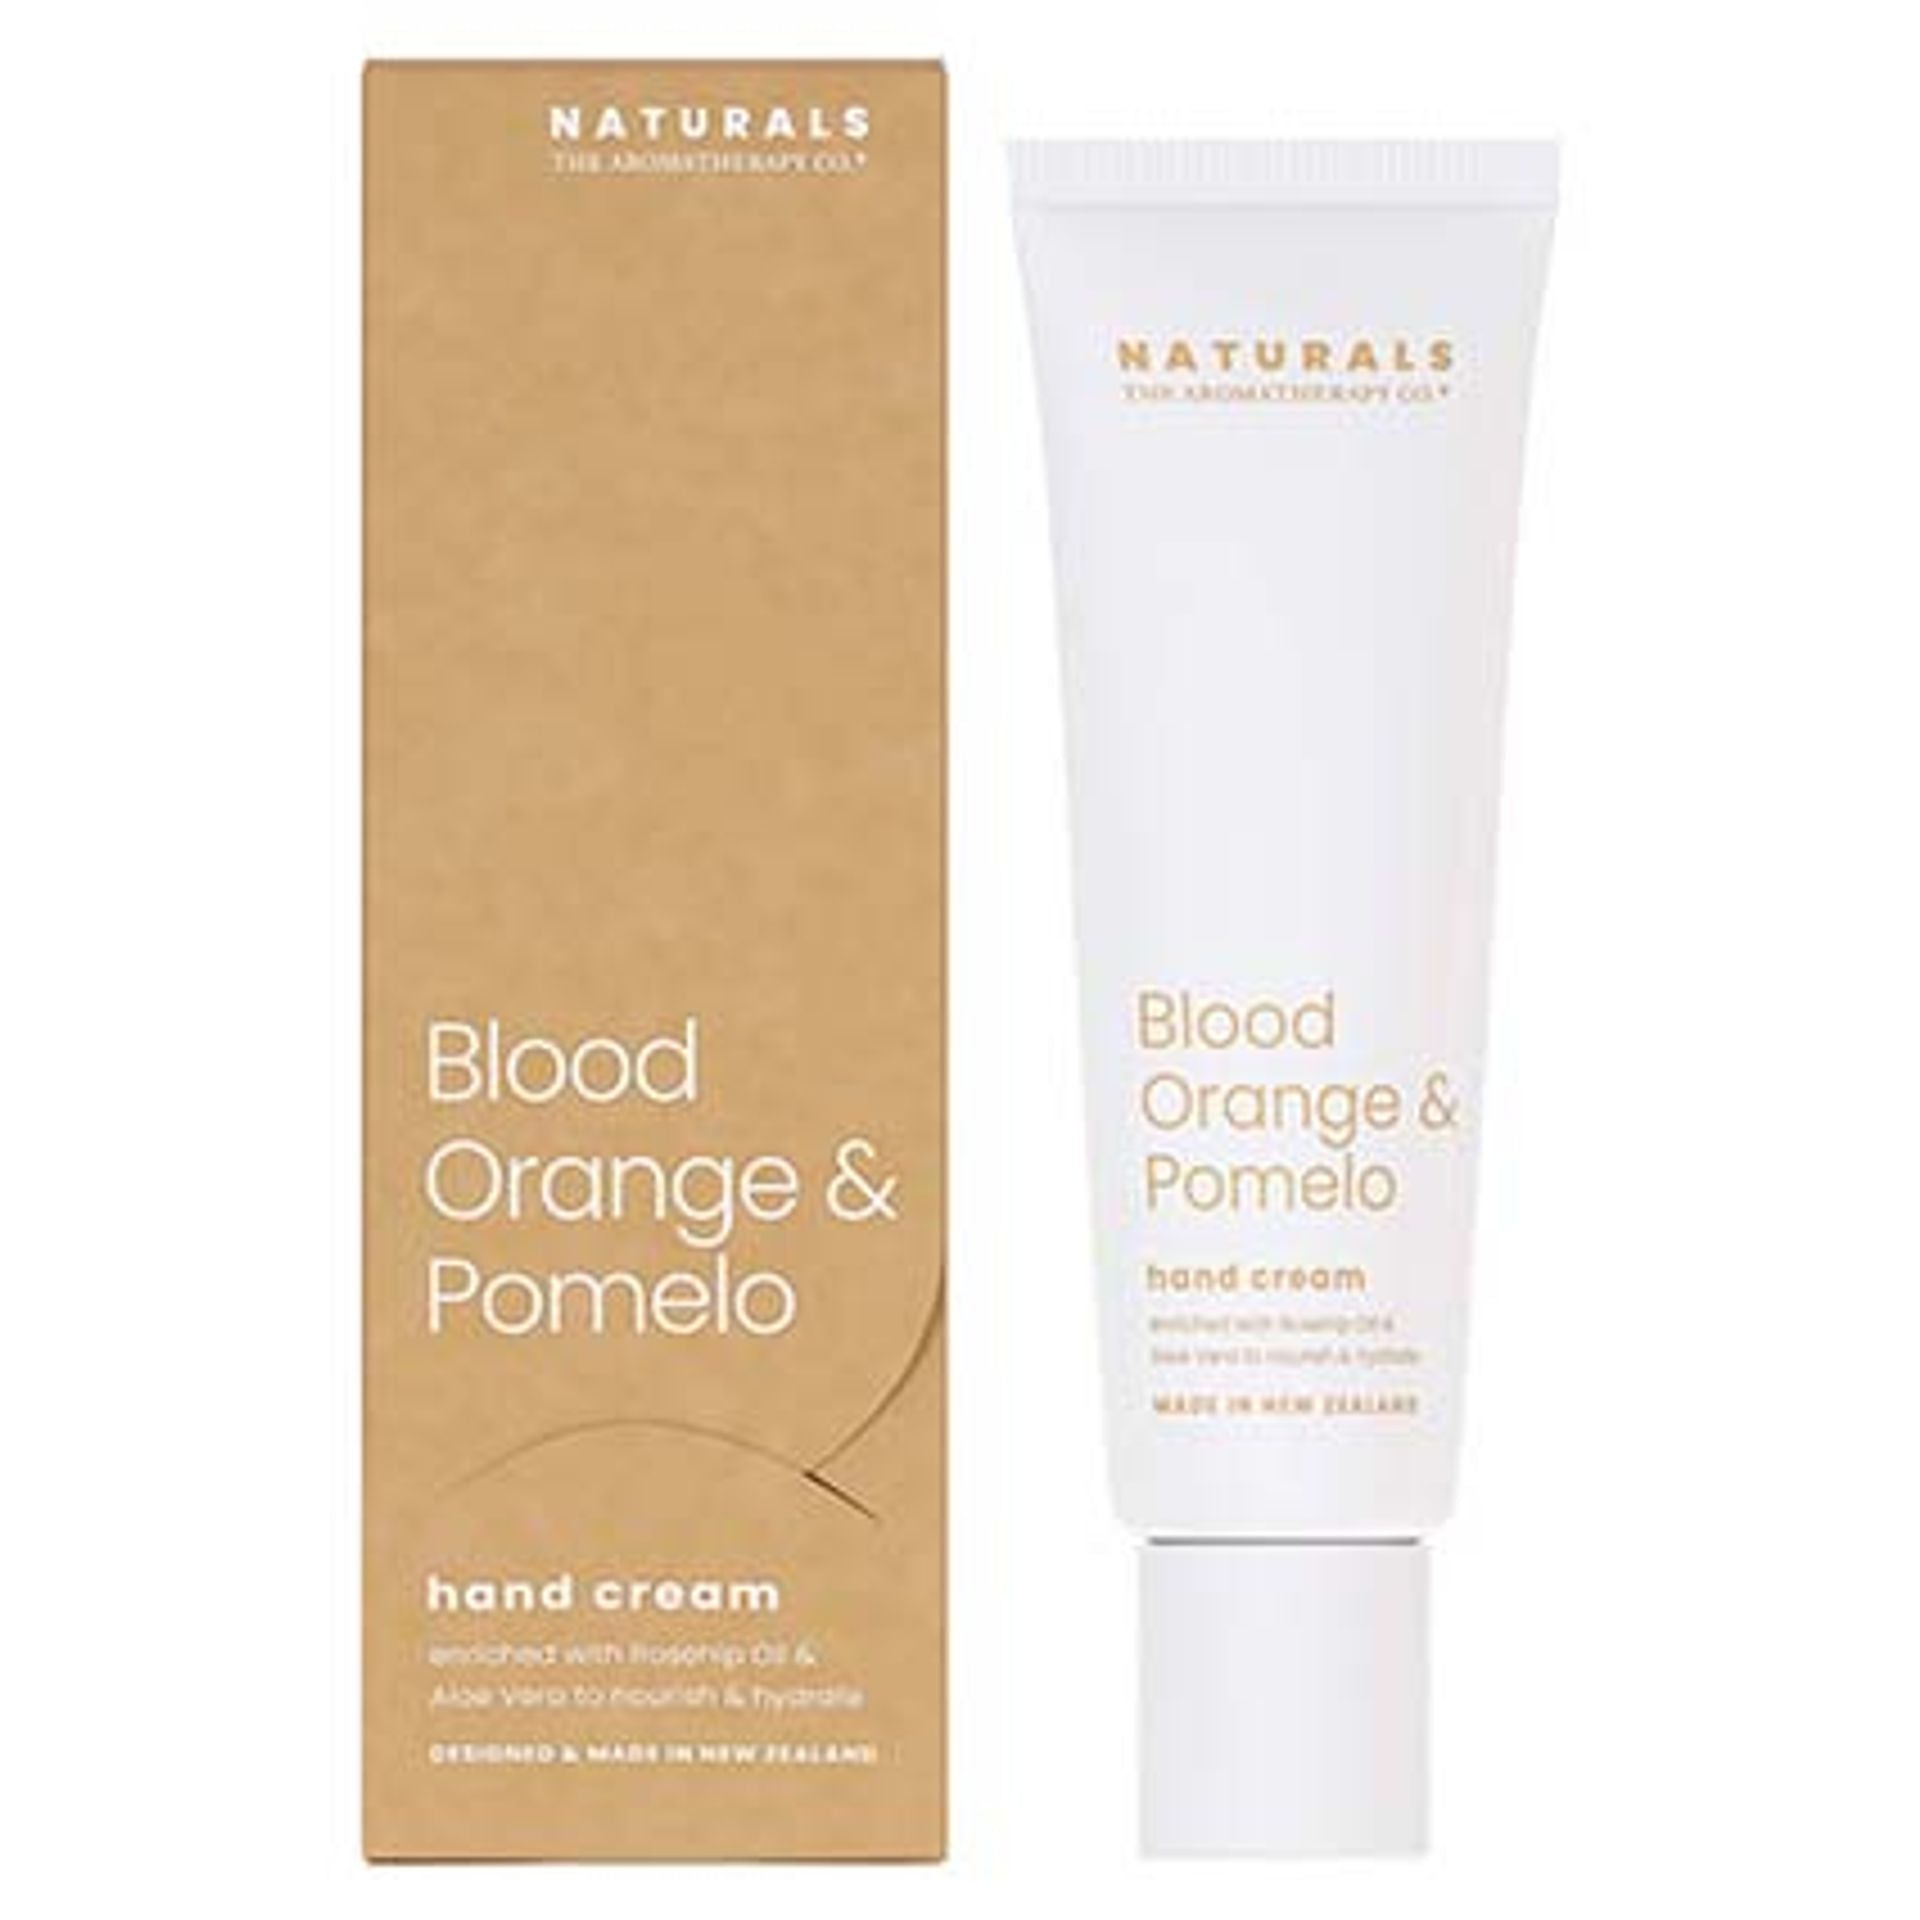 The Aromatherapy Co Naturals Blood Orange & Pomelo Hand Cream